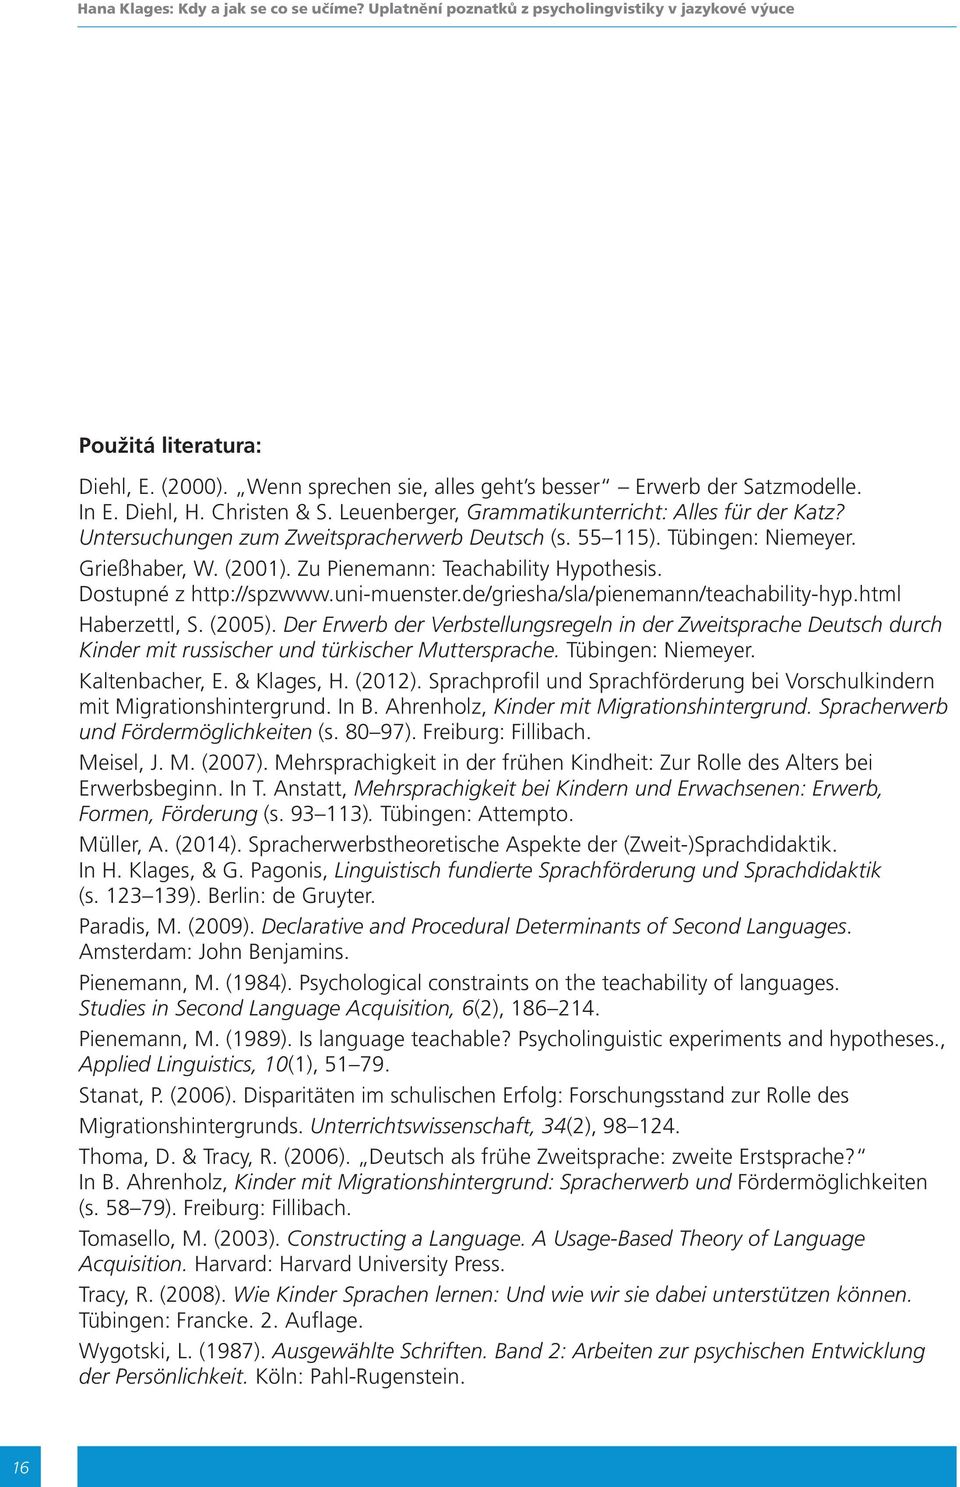 Zu Pienemann: Teachability Hypothesis. Dostupné z http://spzwww.uni-muenster.de/griesha/sla/pienemann/teachability-hyp.html Haberzettl, S. (2005).